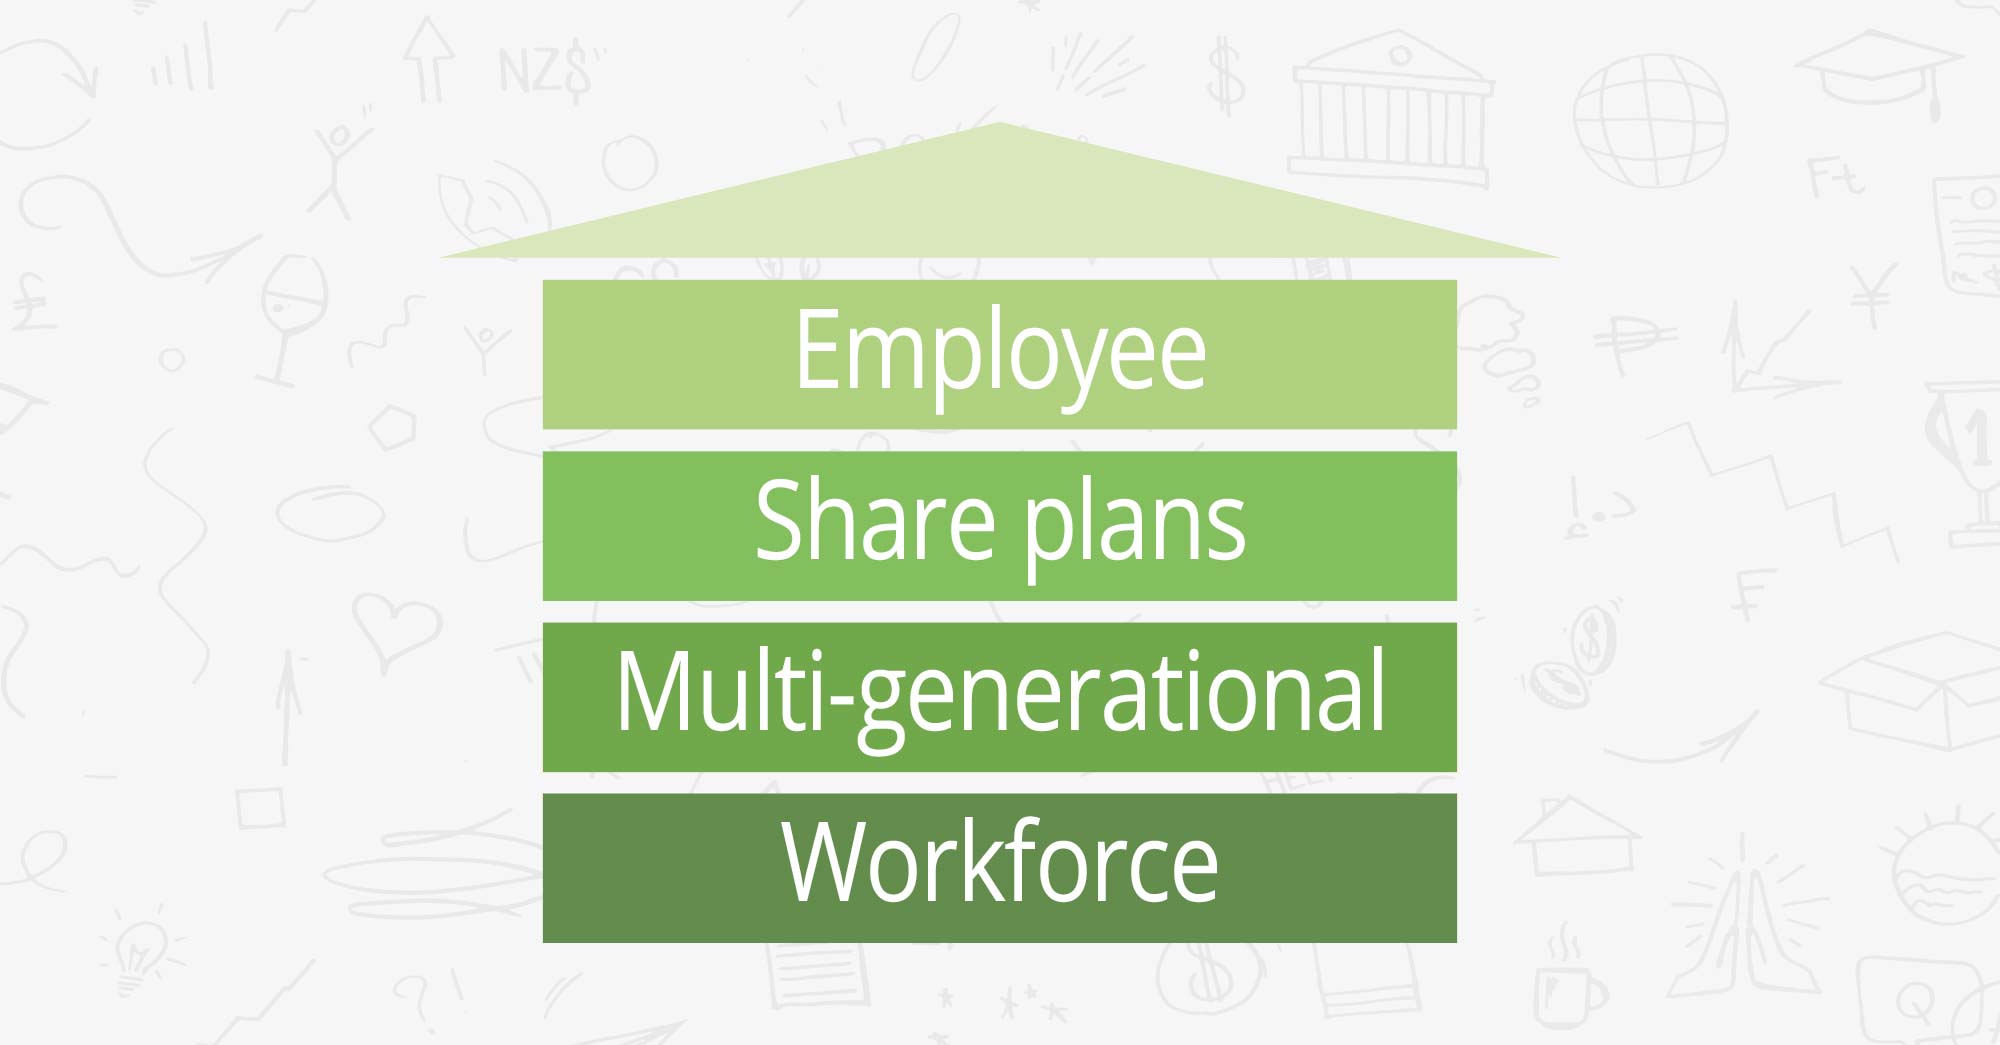 Employee share plans across a multi-generational workforce